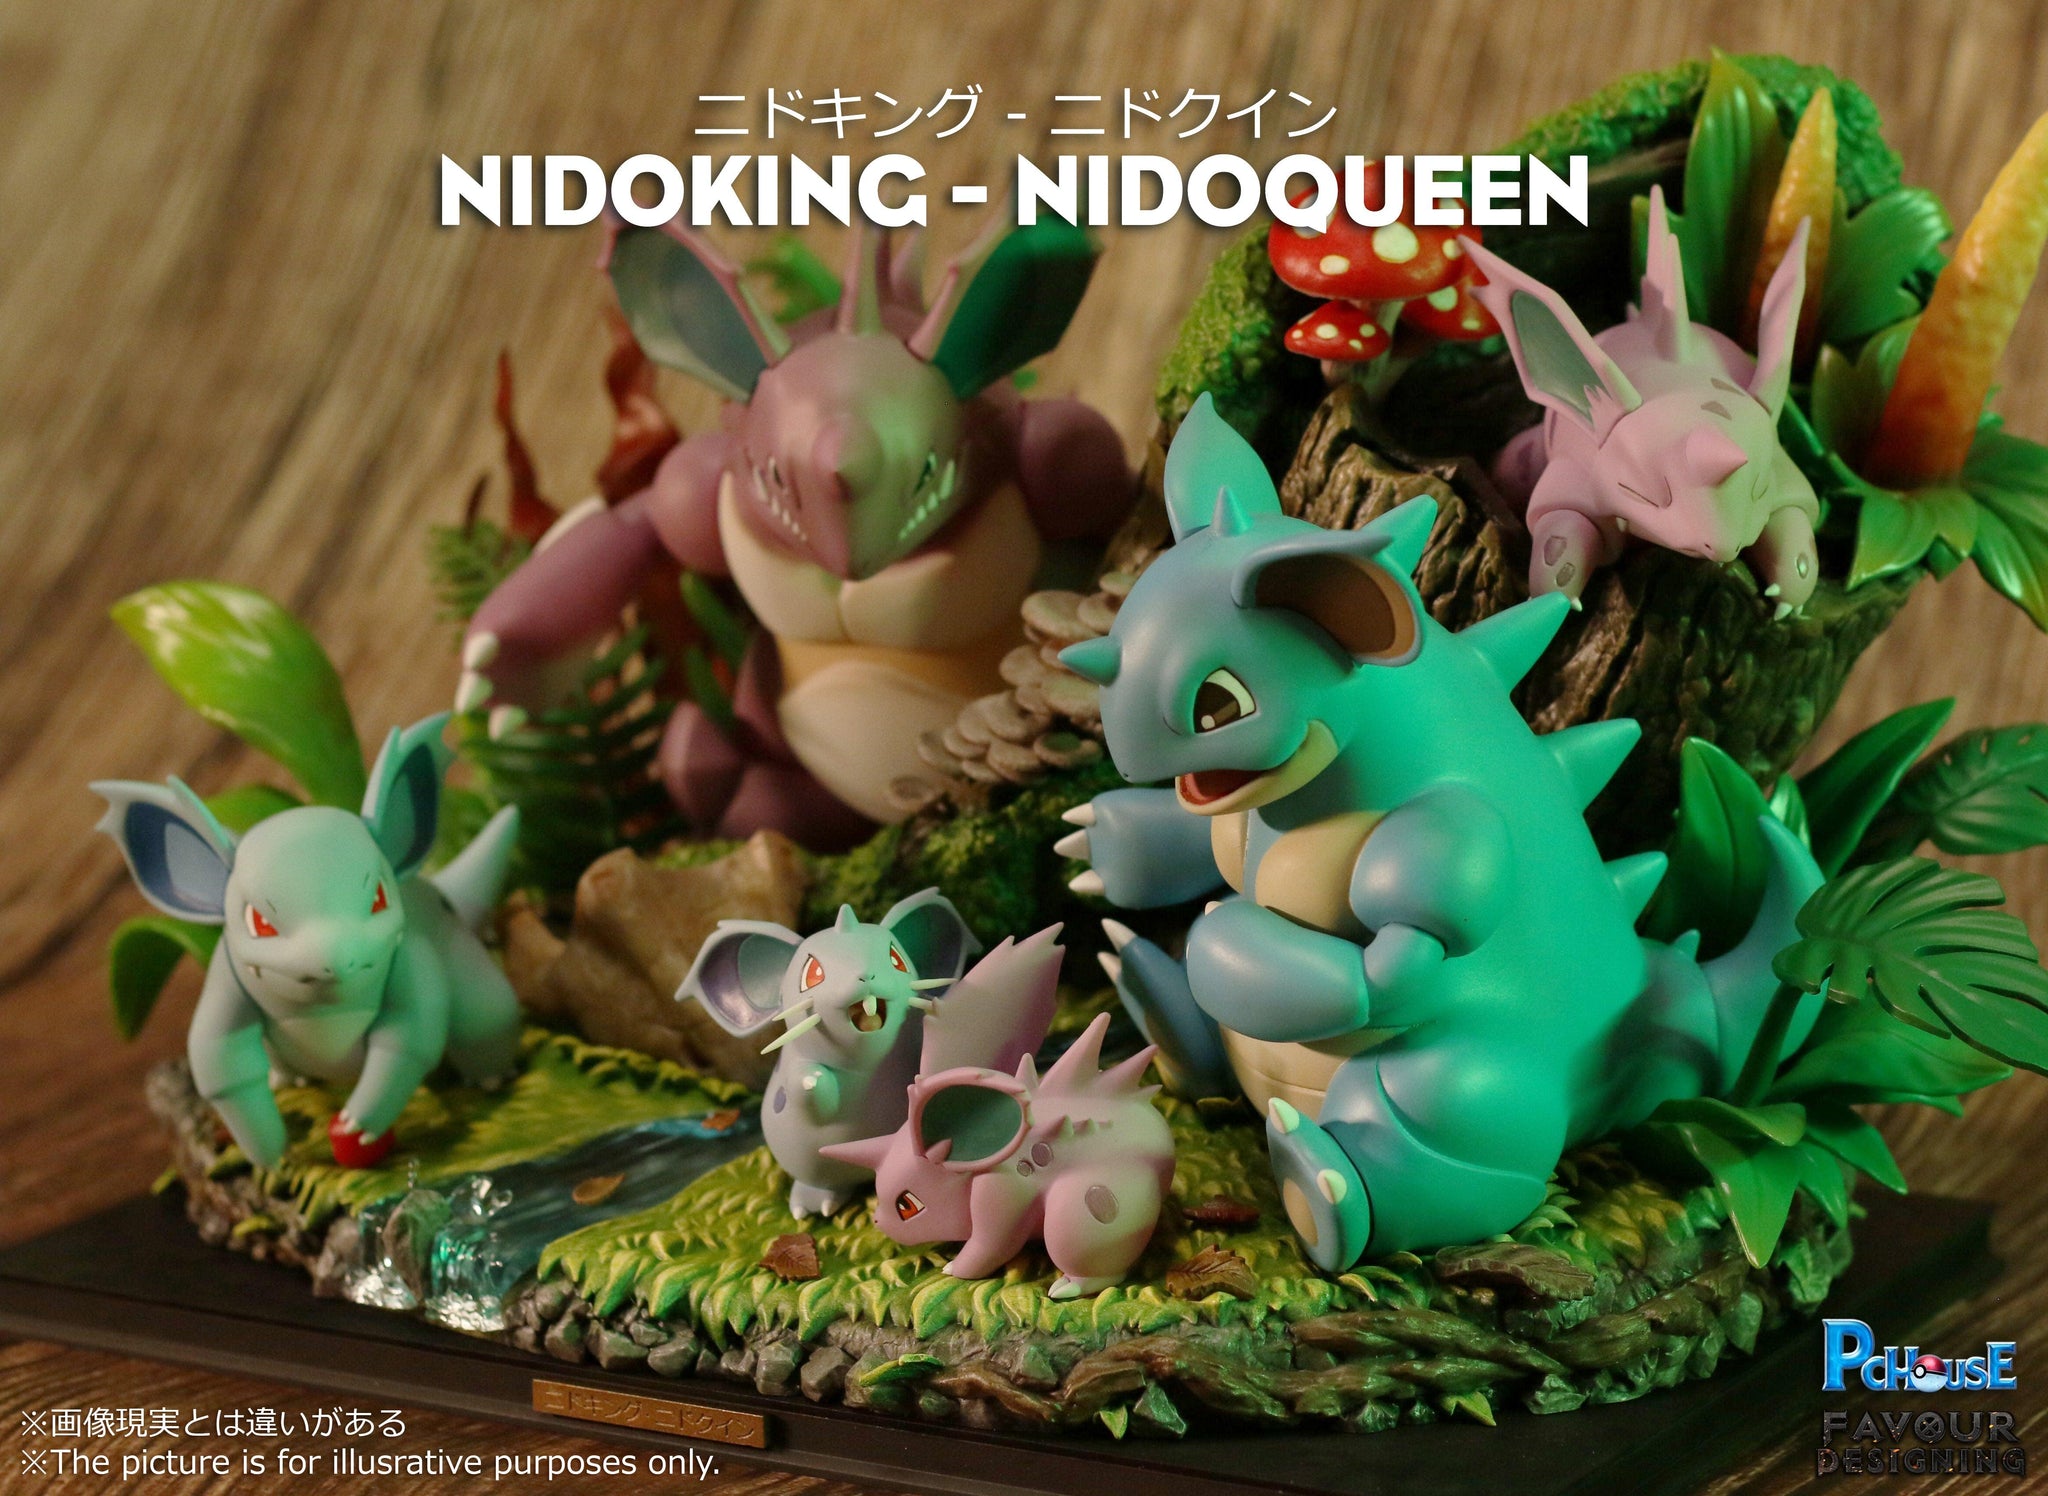 Nido Family Pokemon Resin Statues Pchouse Studios Pre Order Favorgk